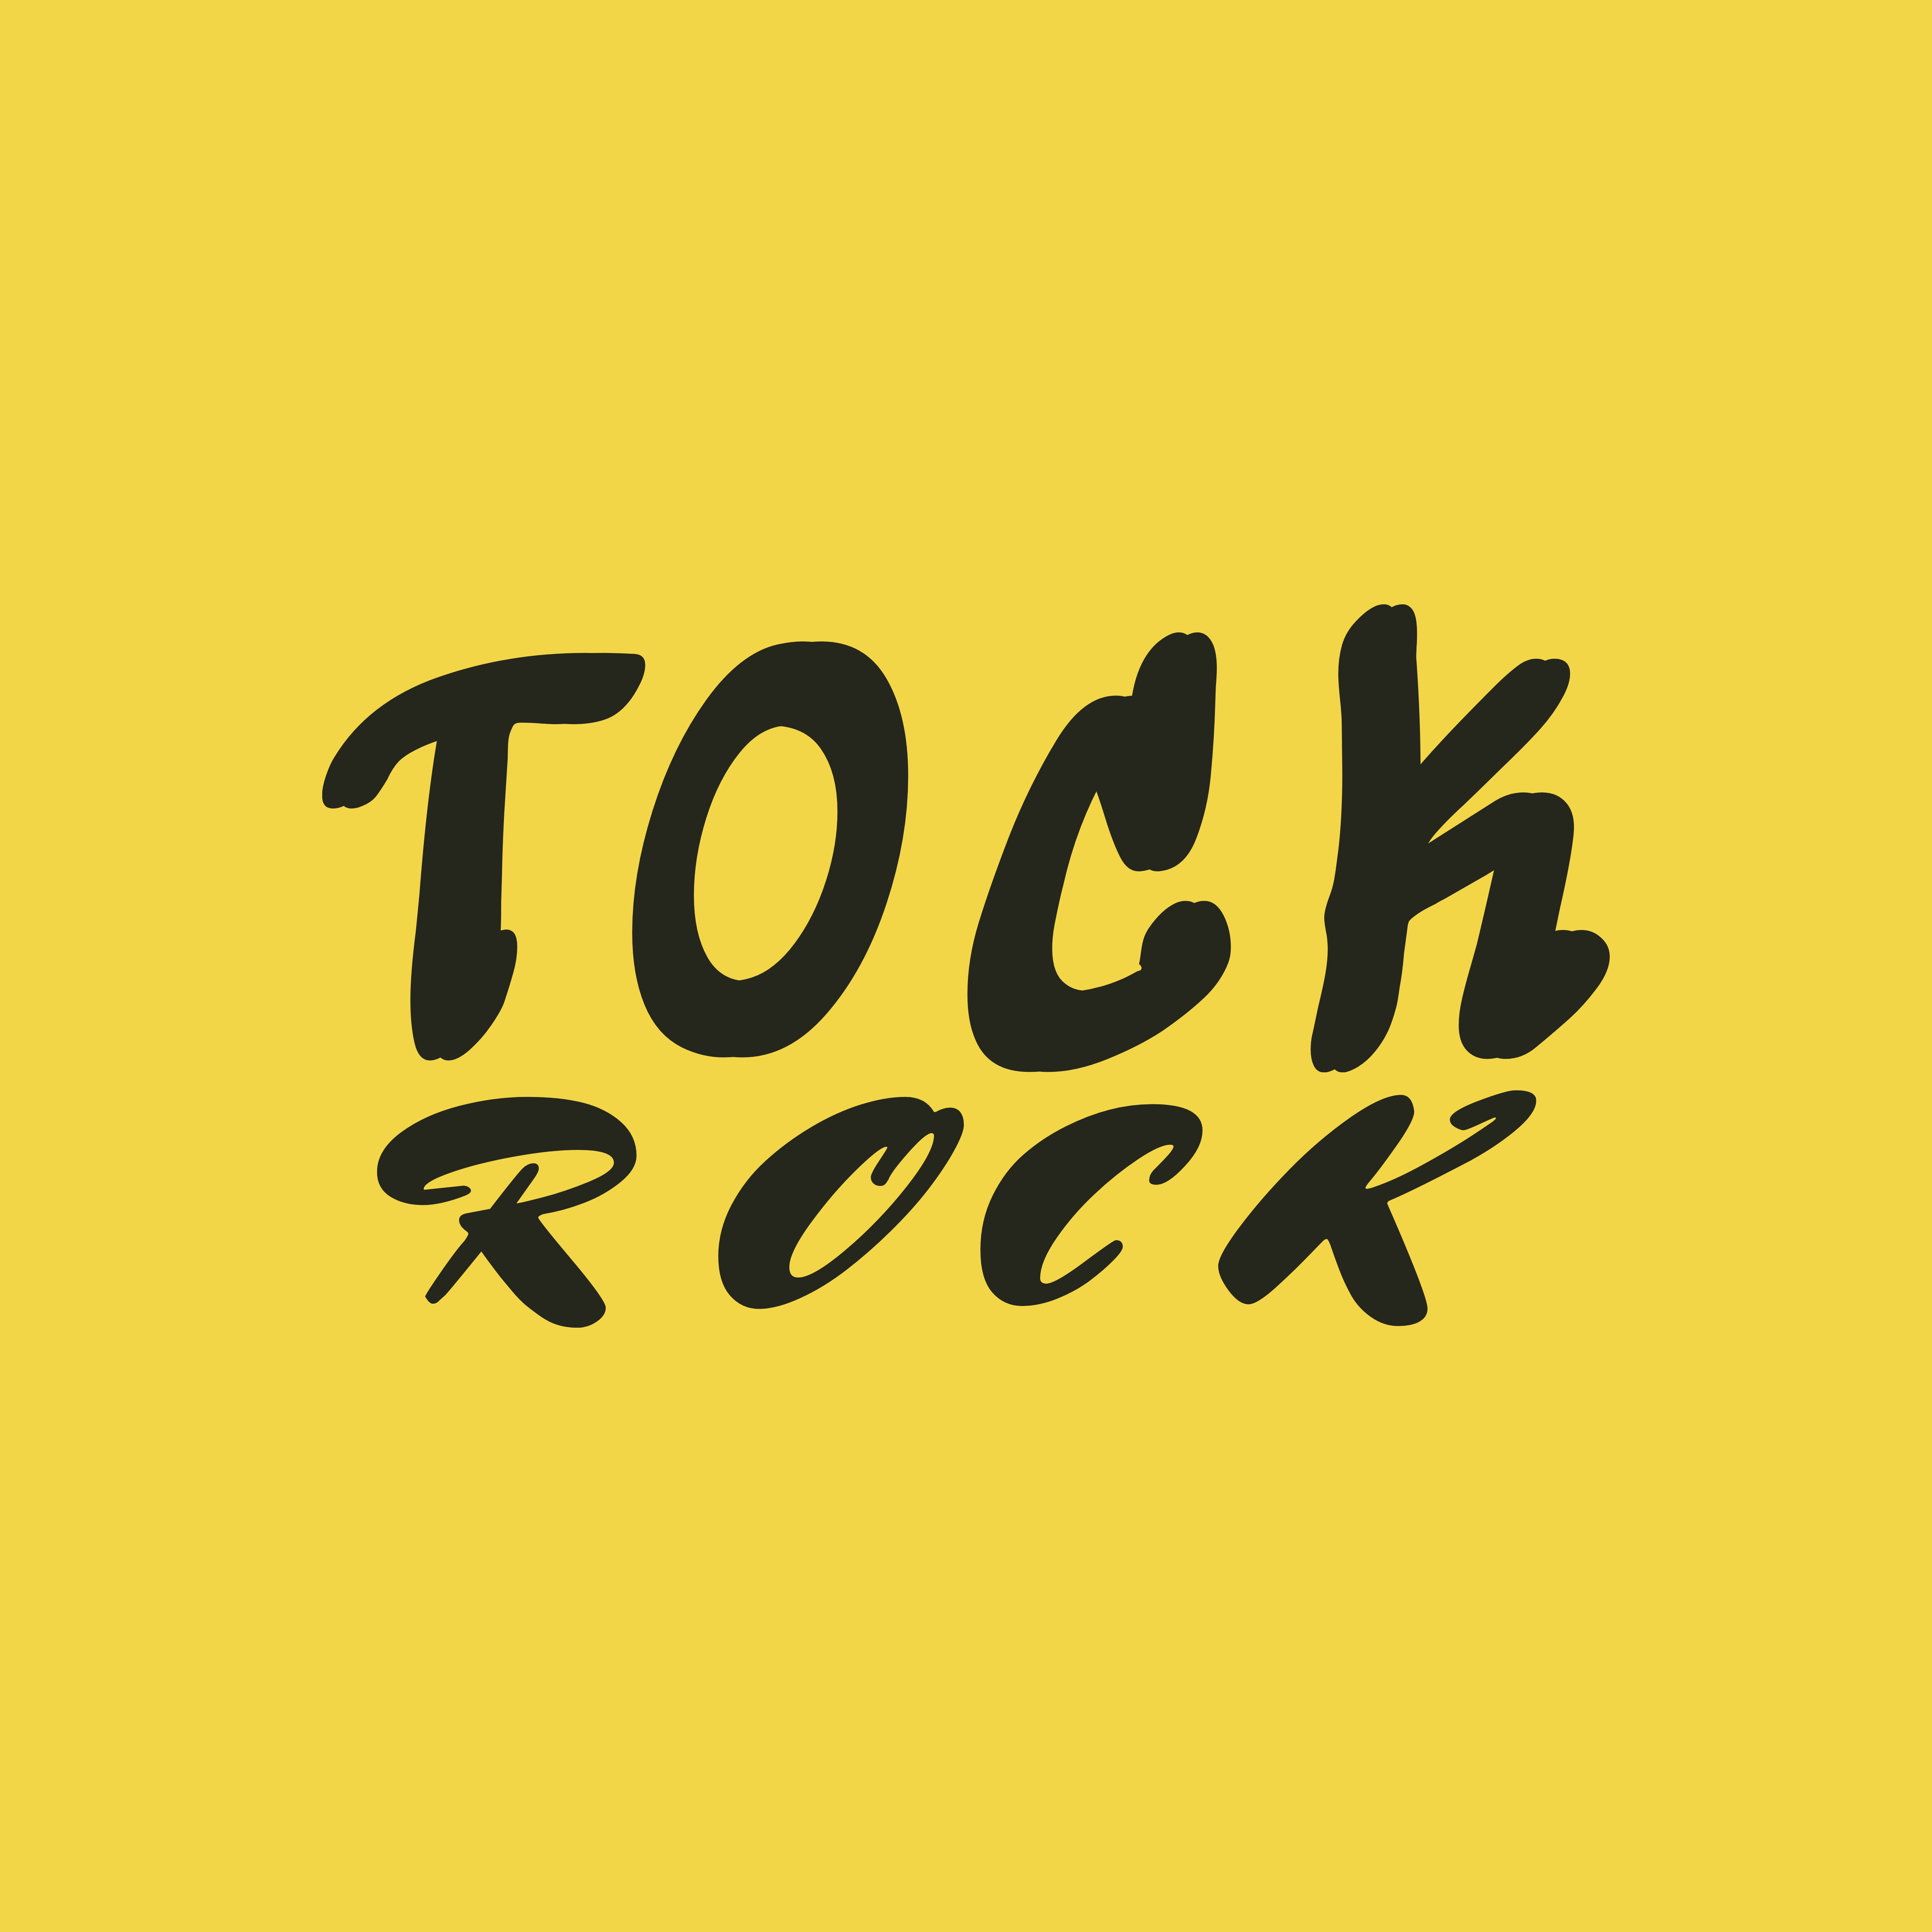 Art for ID More fav Tock Rock  by More fav Tock Rock 